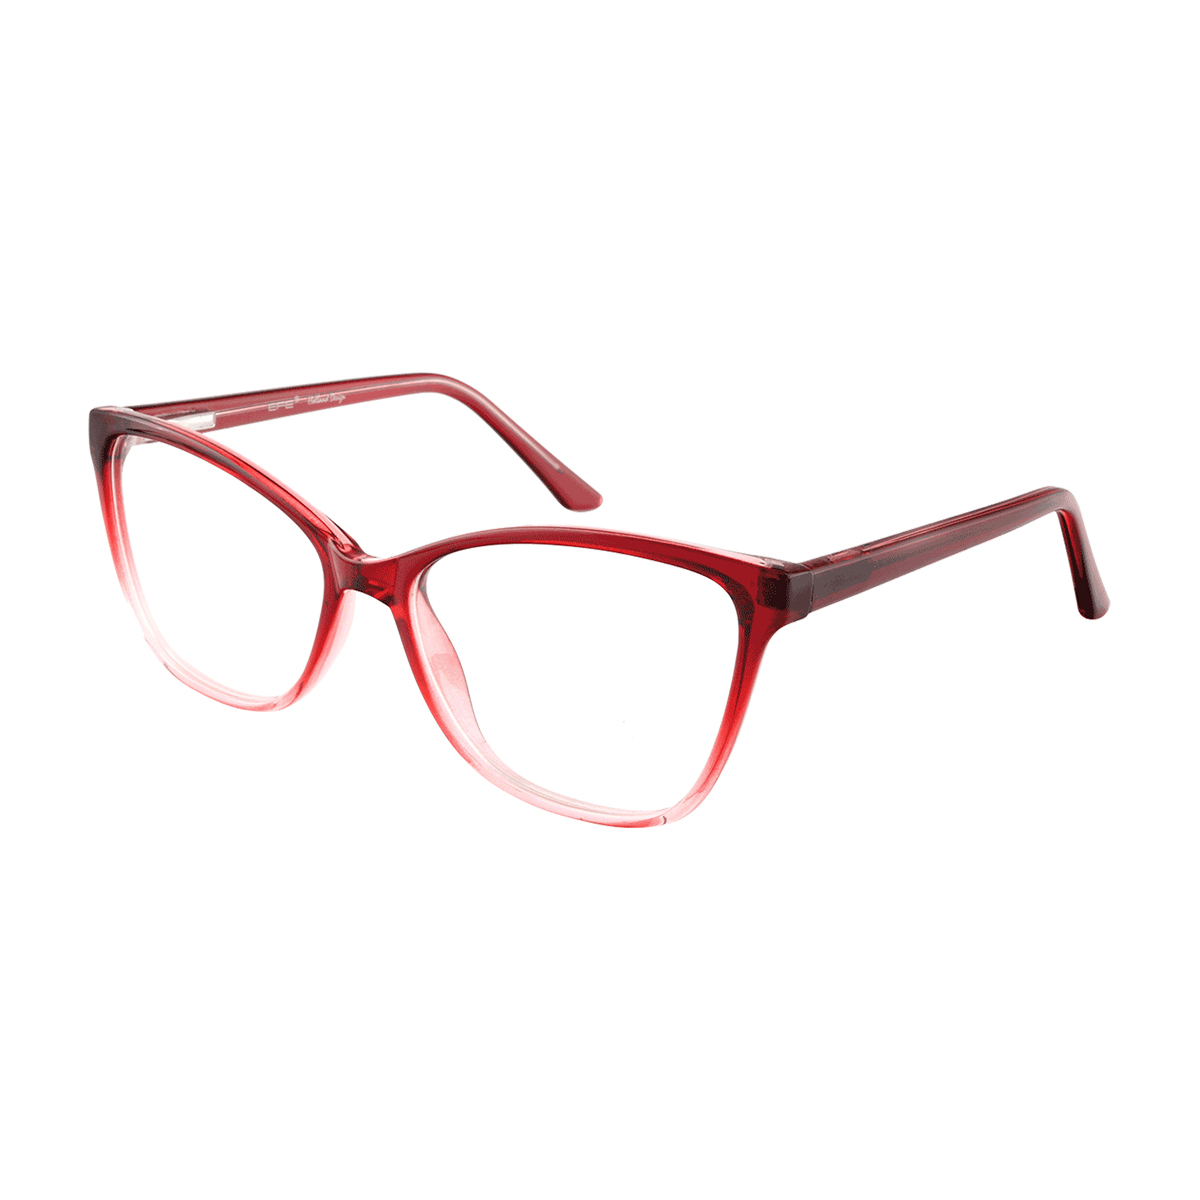 Asies - Cat-eye Red Reading Glasses for Women